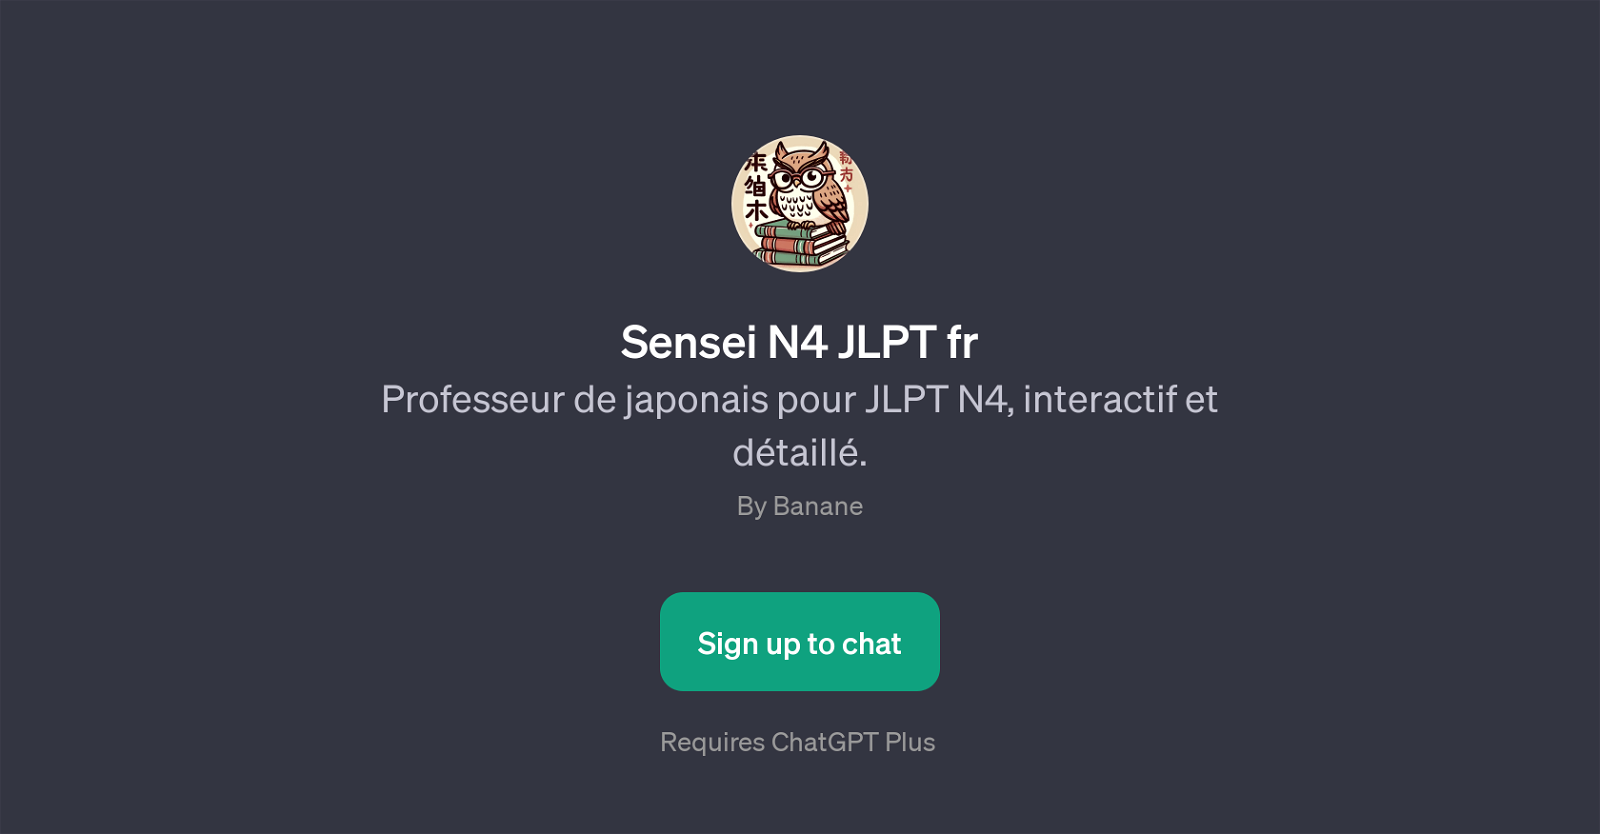 Sensei N4 JLPT fr website